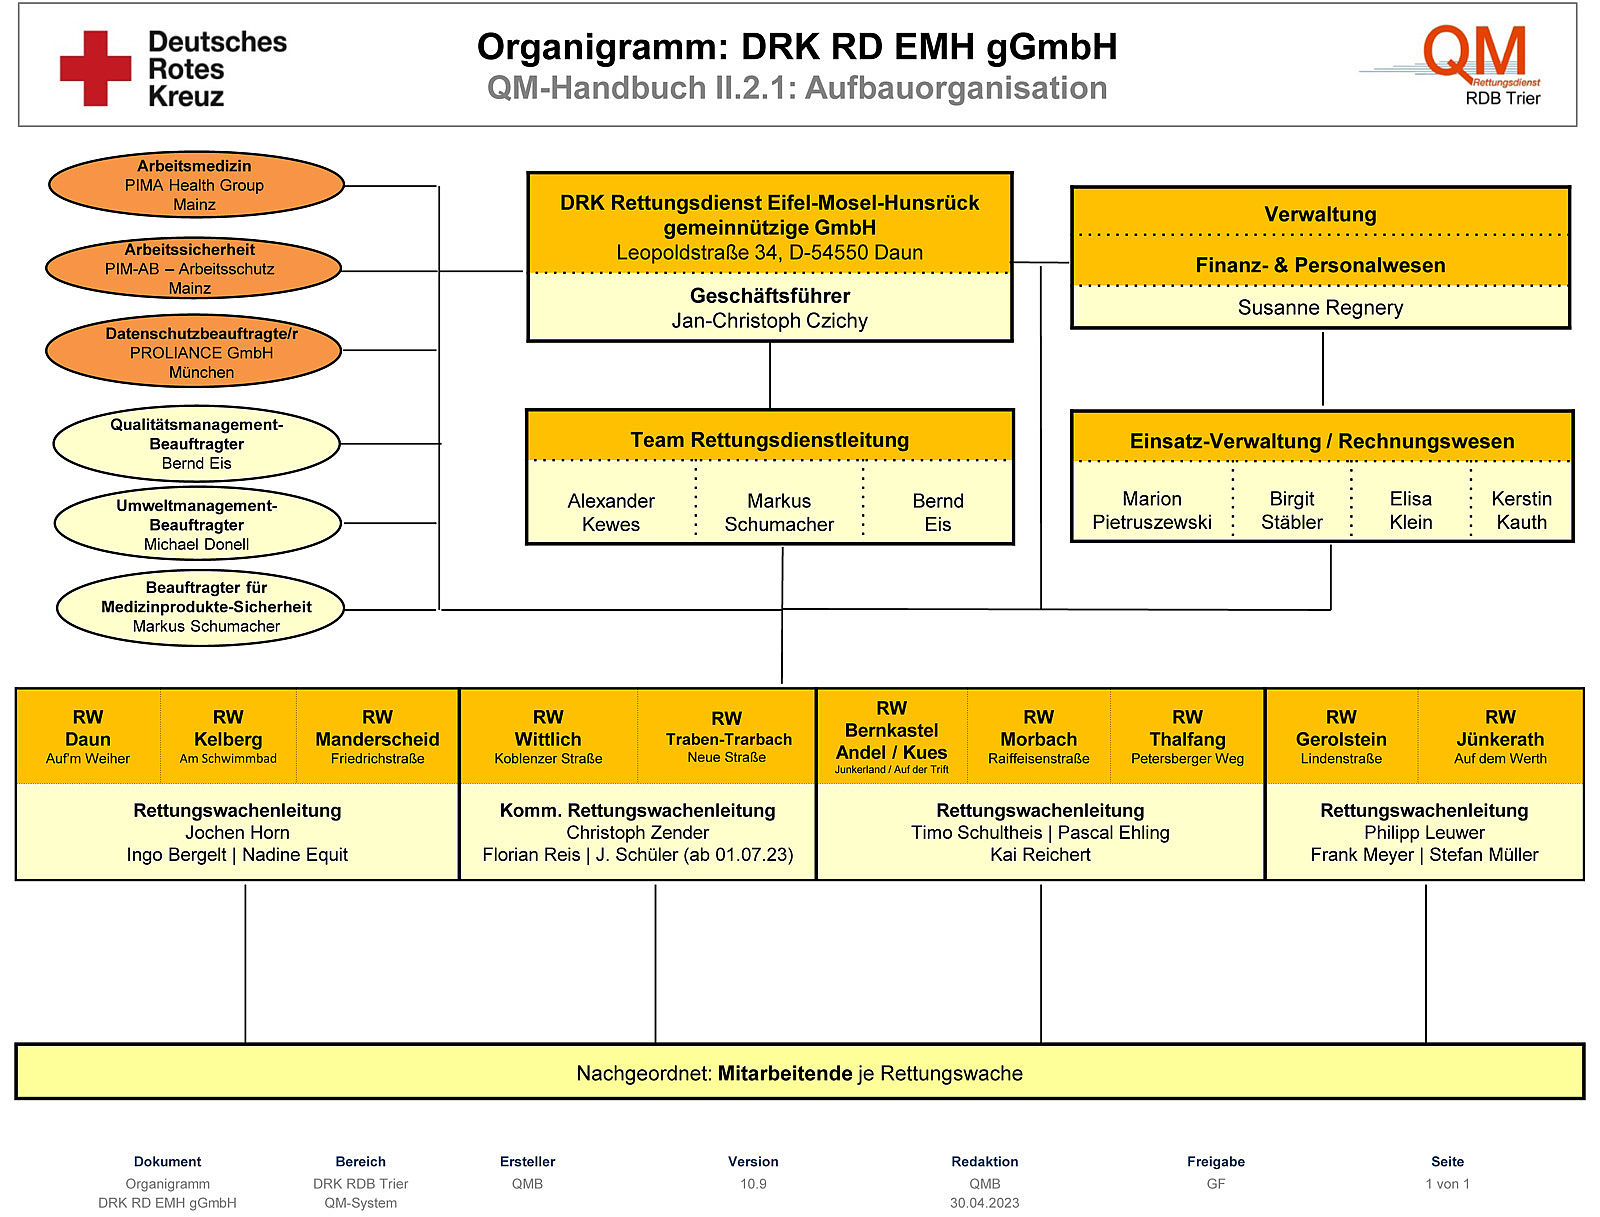 Organigramm DRK RD EMH gGmbH